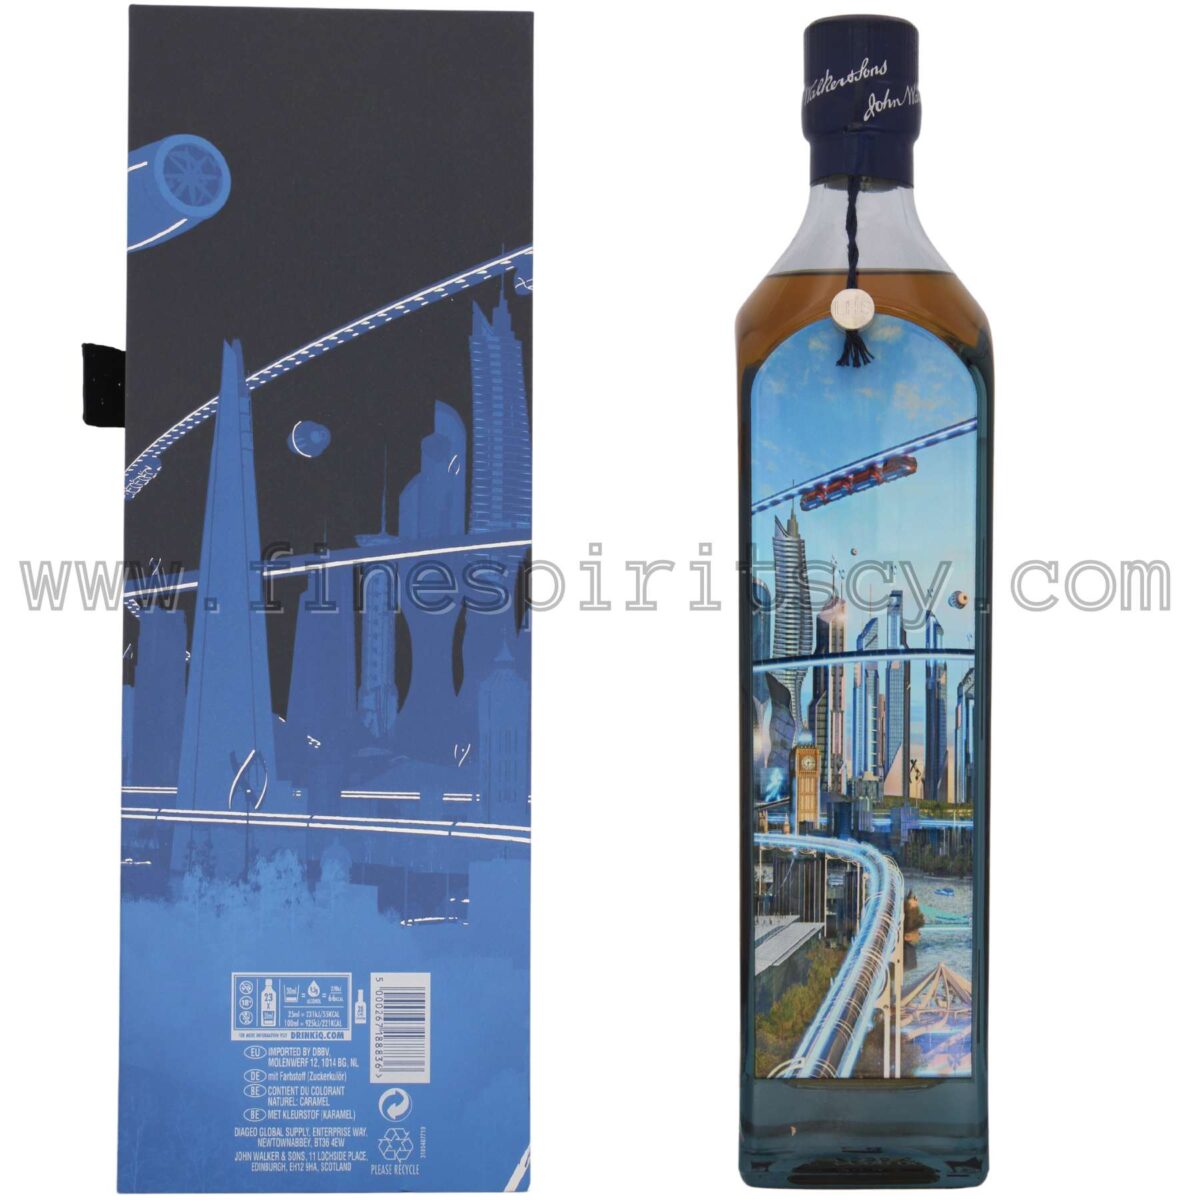 JW Blue Label London Box 2220 Cities Back Bottle Design Cyprus Online Order